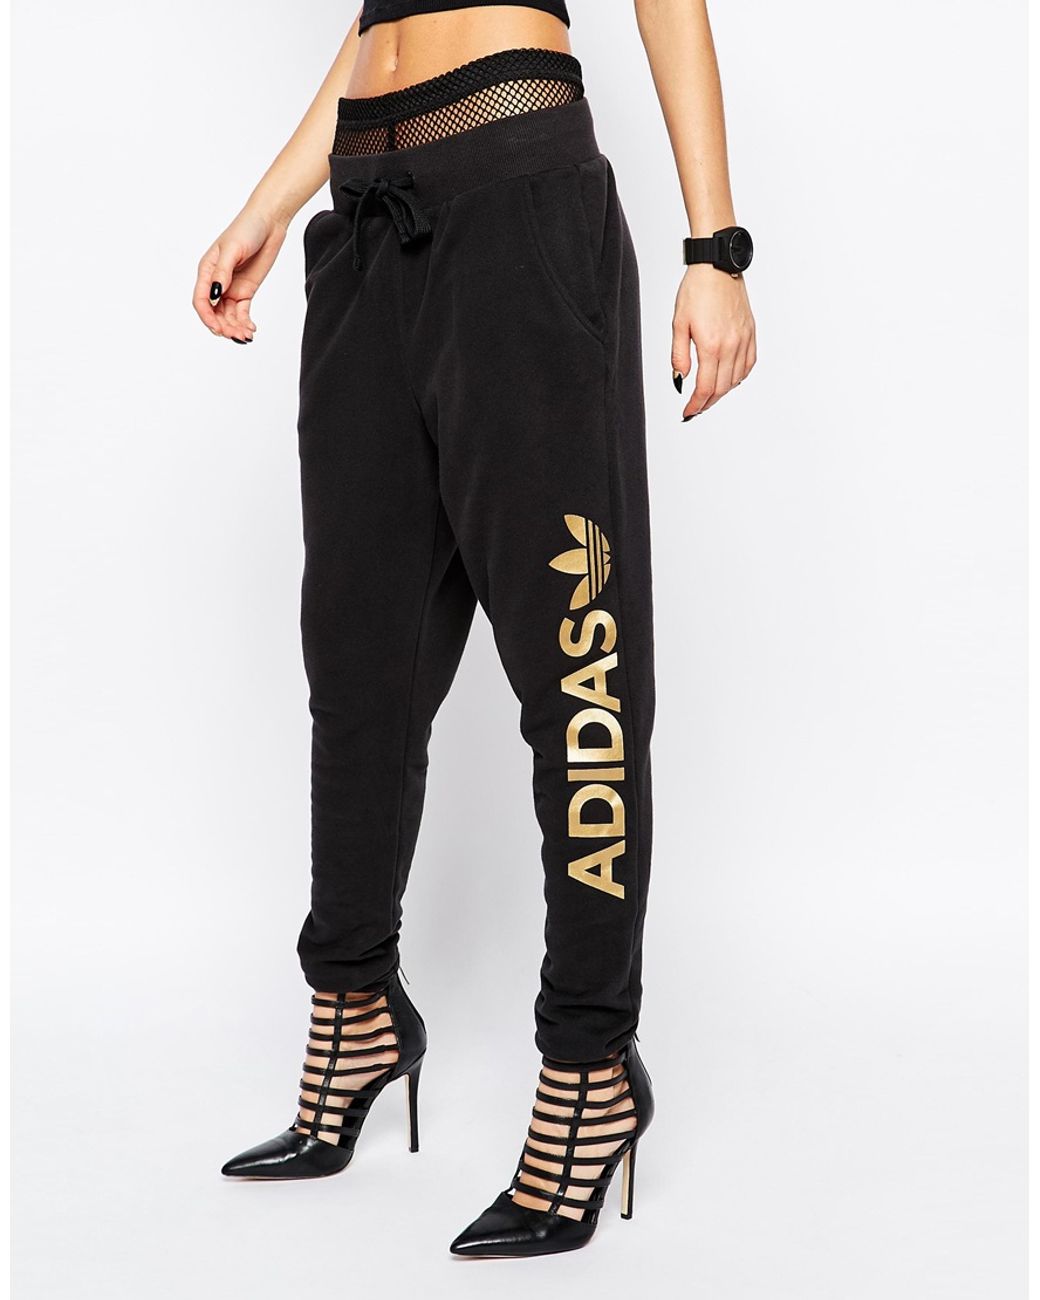 ADIDAS Climacool Track Pants Joggers Black Gold 3 Stripes Zip Pockets Mens  Sz S  eBay